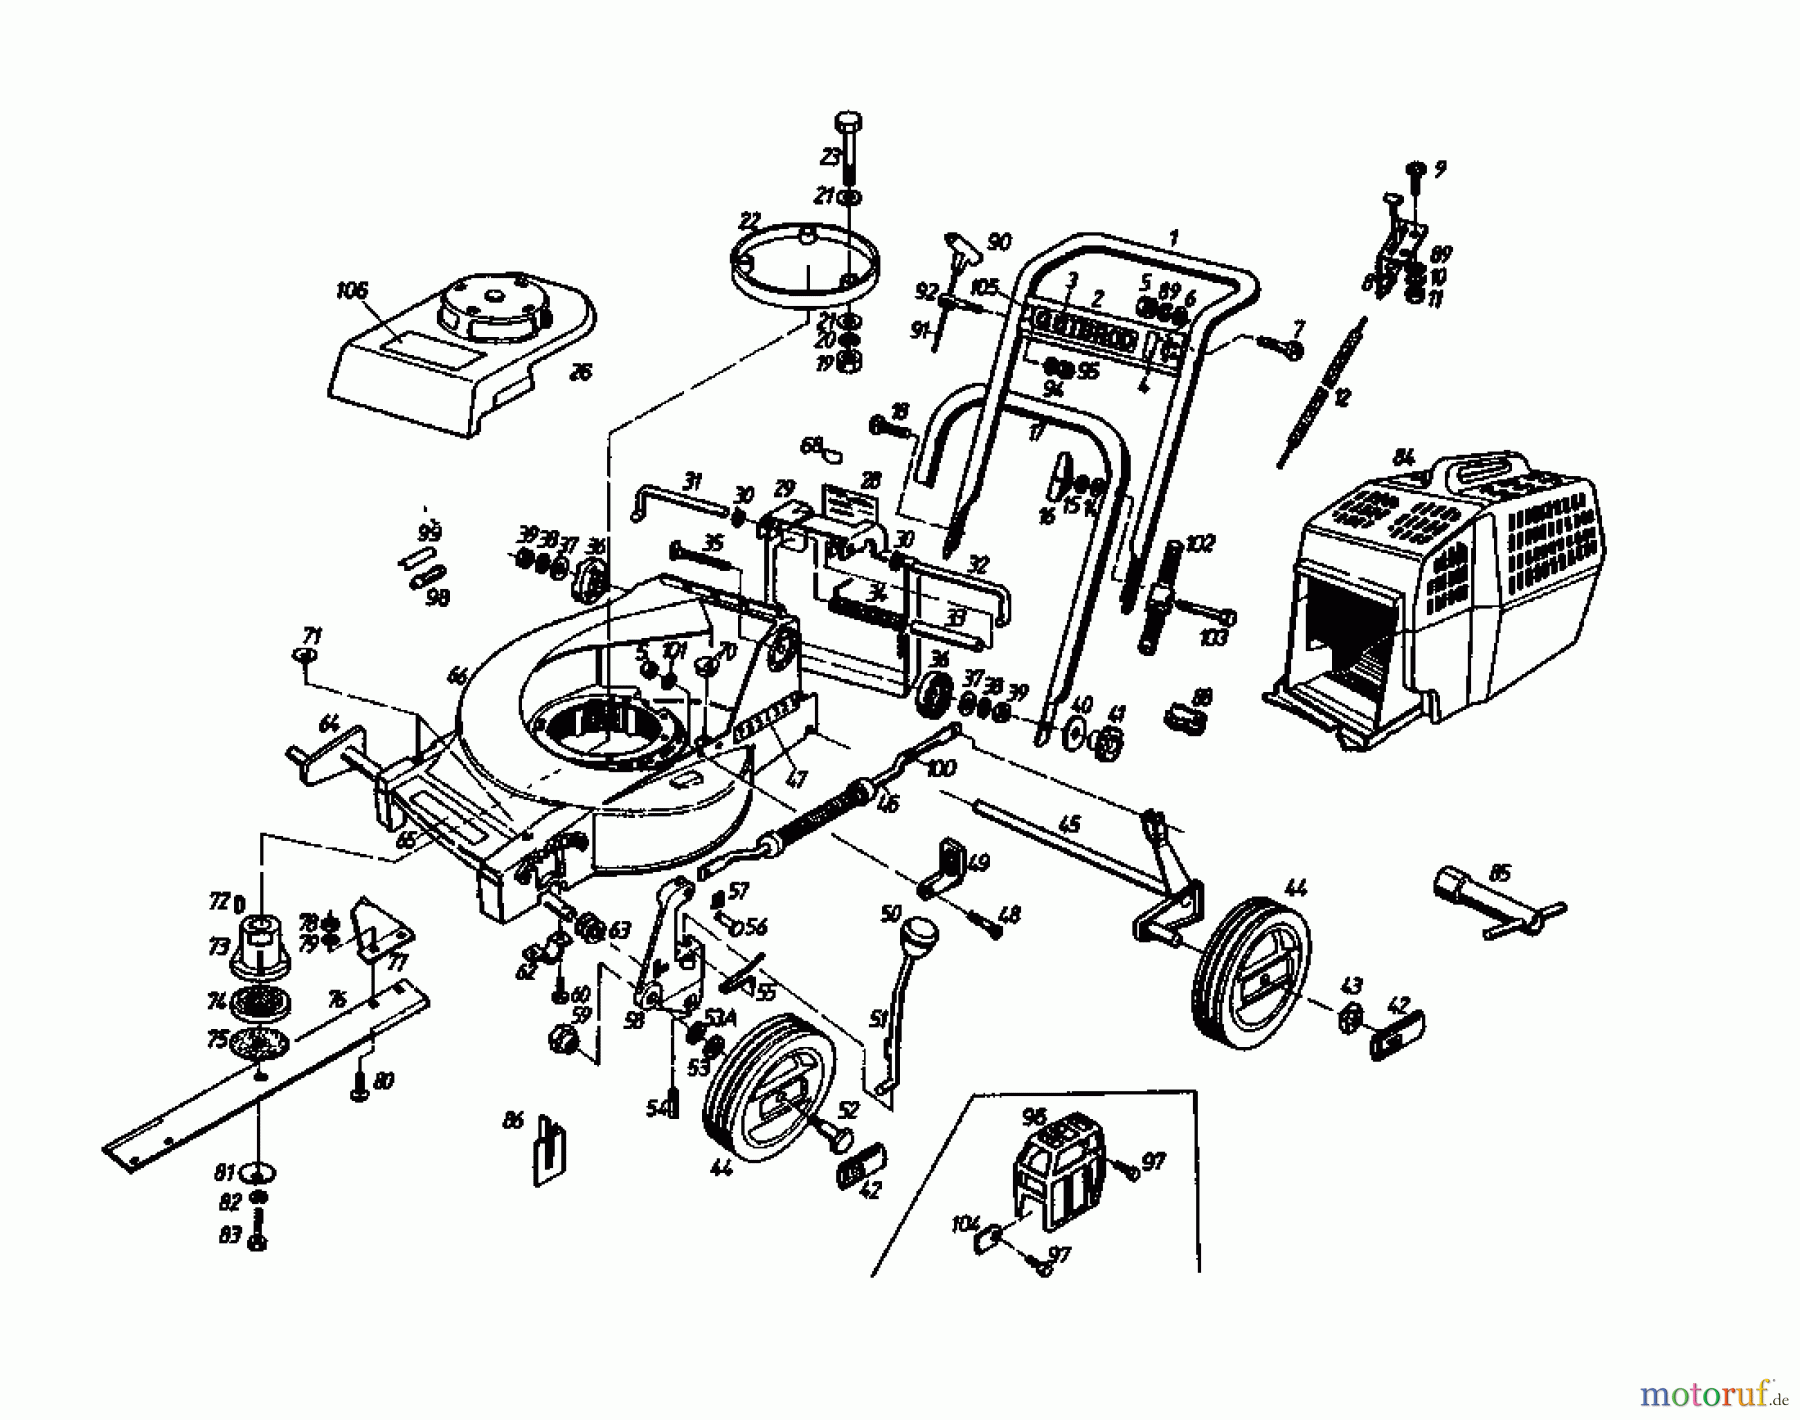  Gutbrod Petrol mower HB 45 E 02644.01  (1987) Basic machine